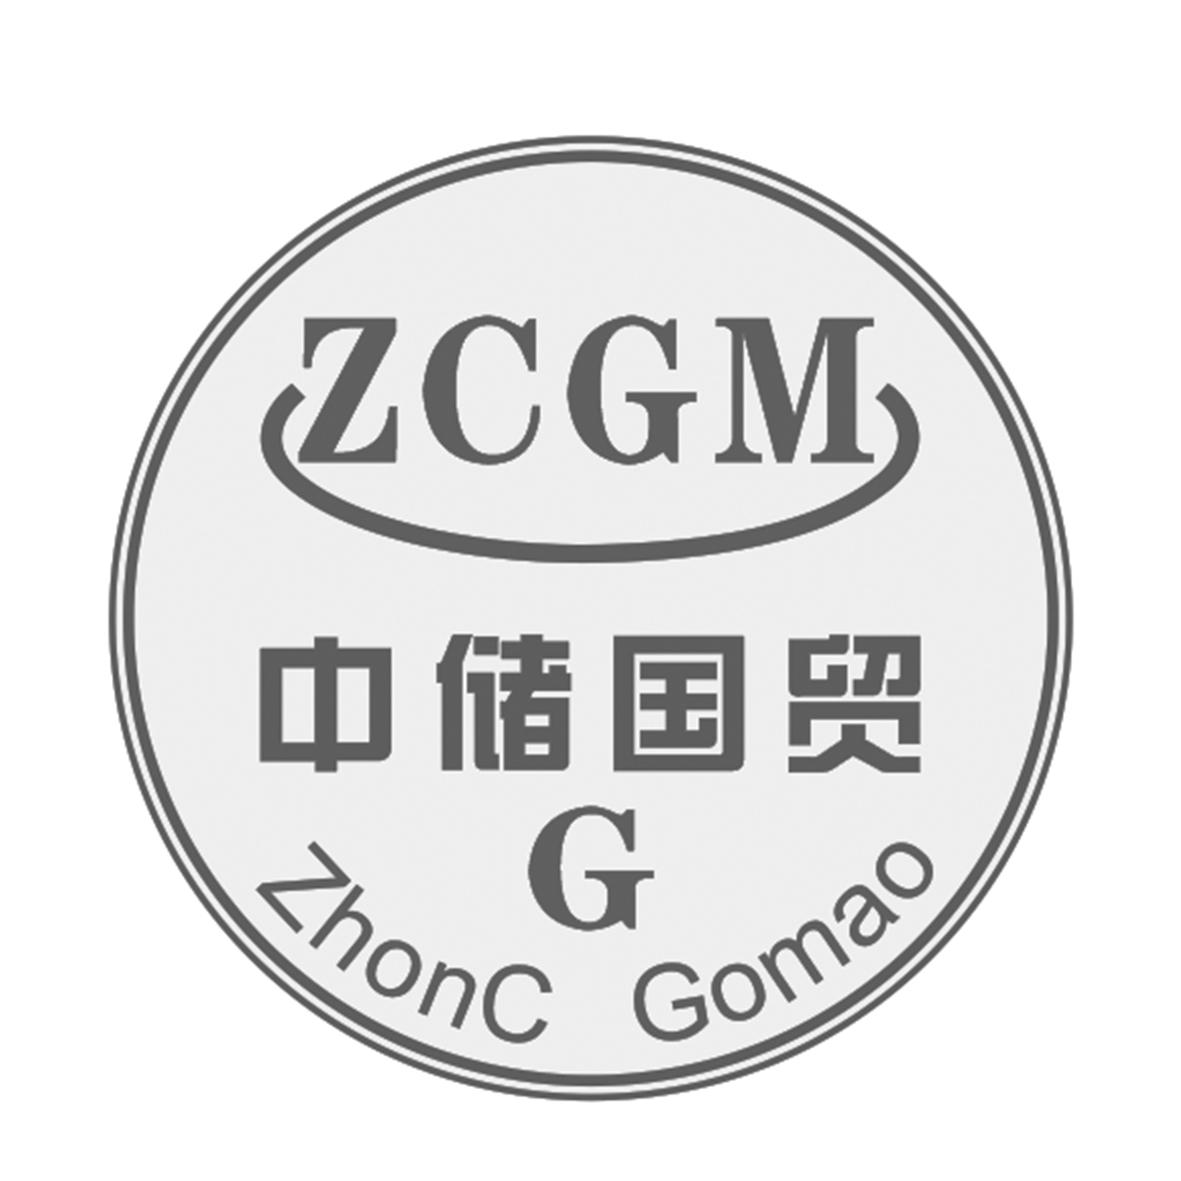 zcgm 中储国贸 g zhonc  em>gomao /em>